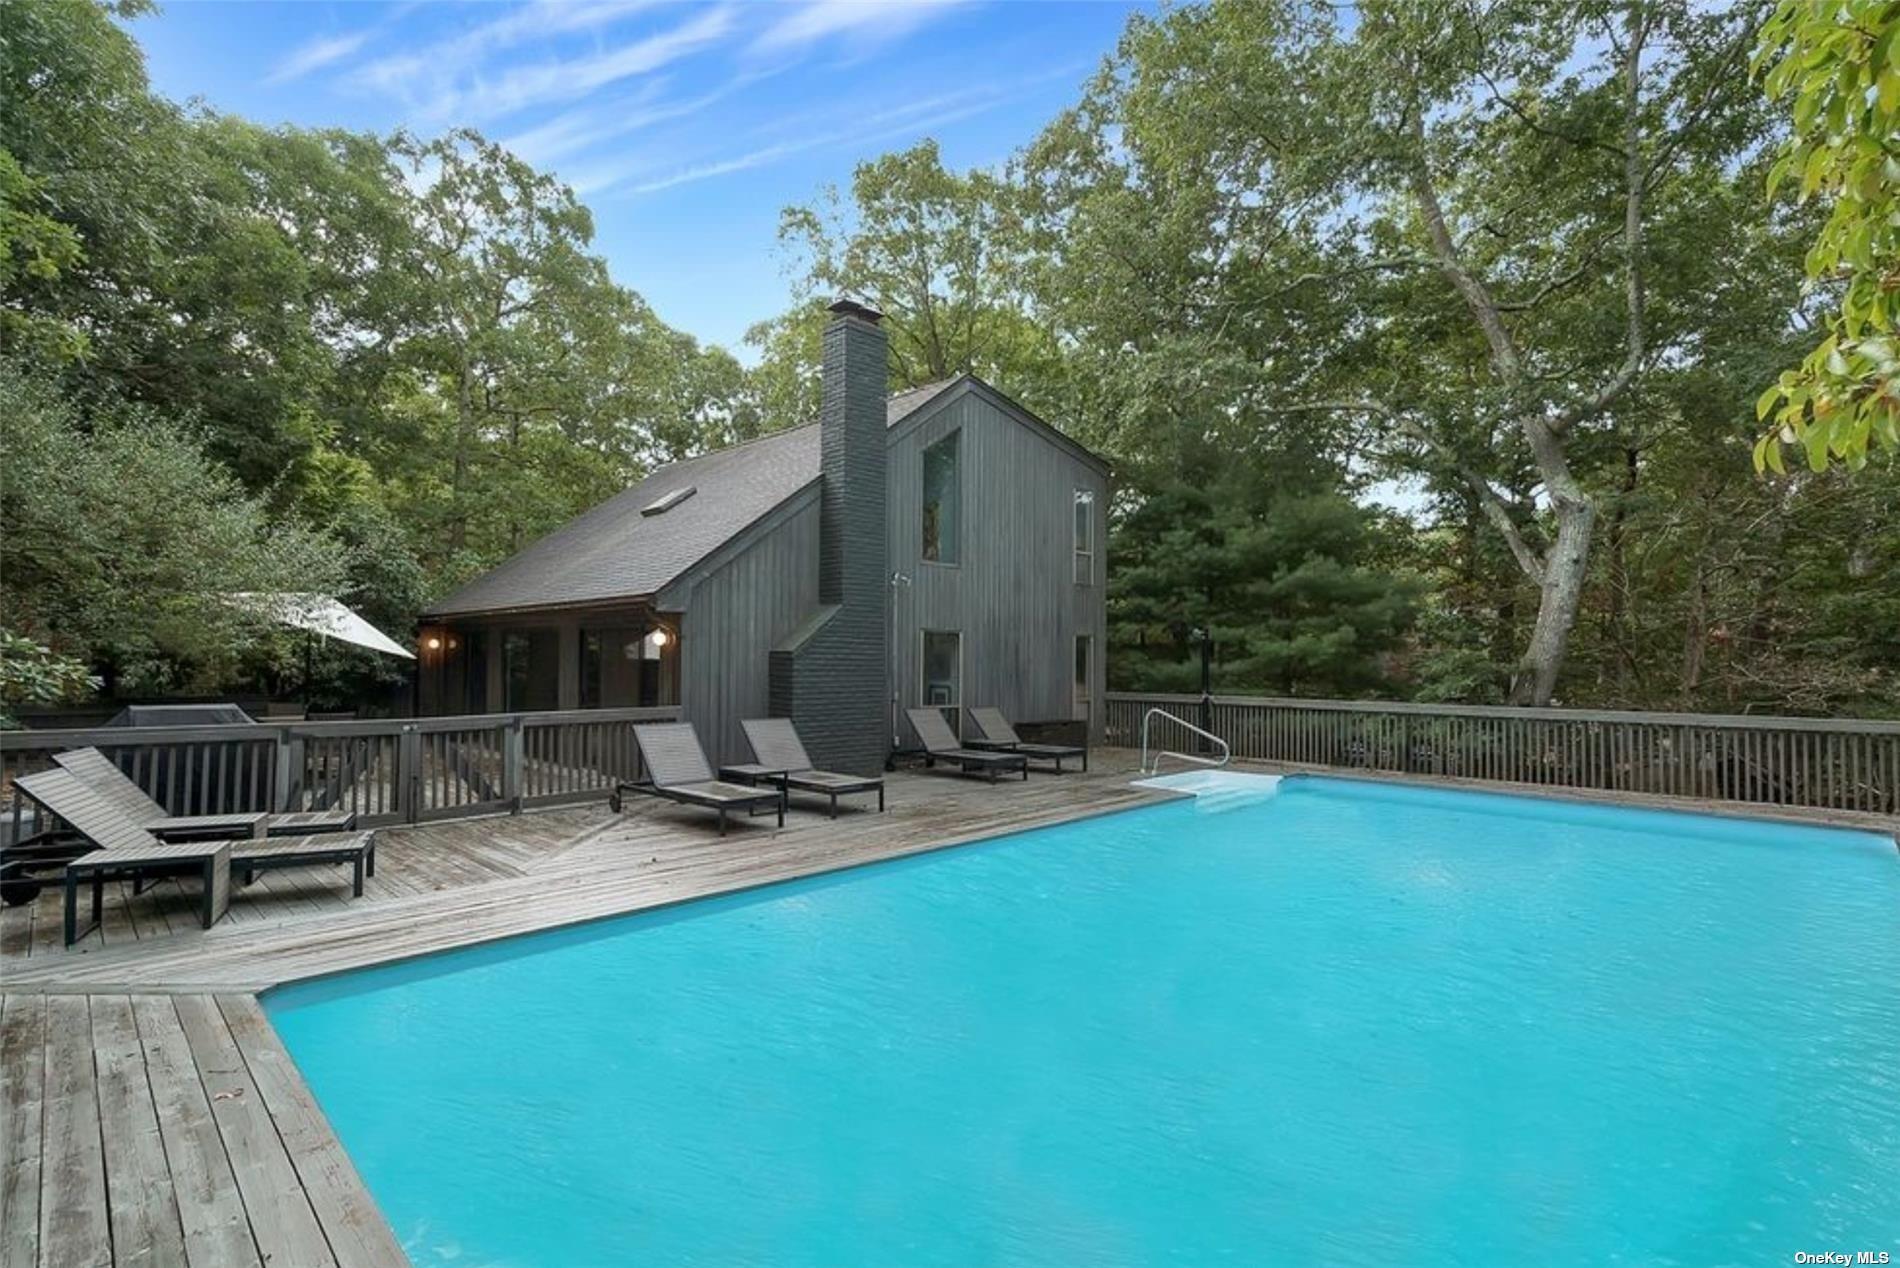 Rental Property at 11 Pioneer Lane, East Hampton, Hamptons, NY - Bedrooms: 3 
Bathrooms: 2  - $25,000 MO.